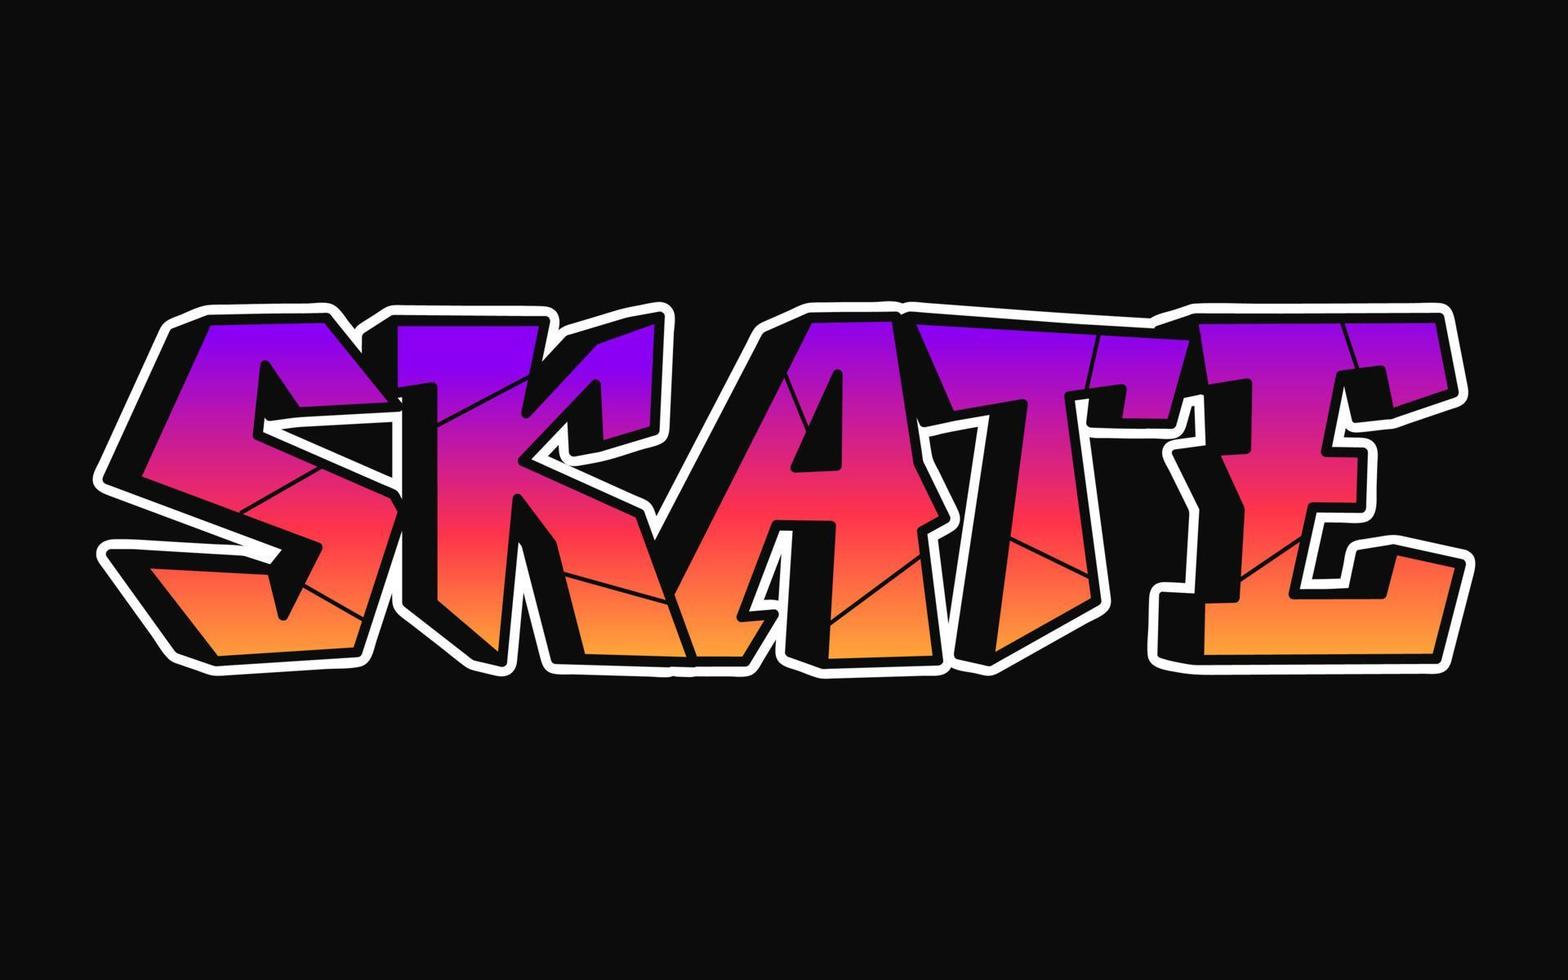 Skate word graffiti style letters. Vector hand drawn doodle cartoon logo skate illustration. Print for poster,t-shirt,tee,logo,sticker concept